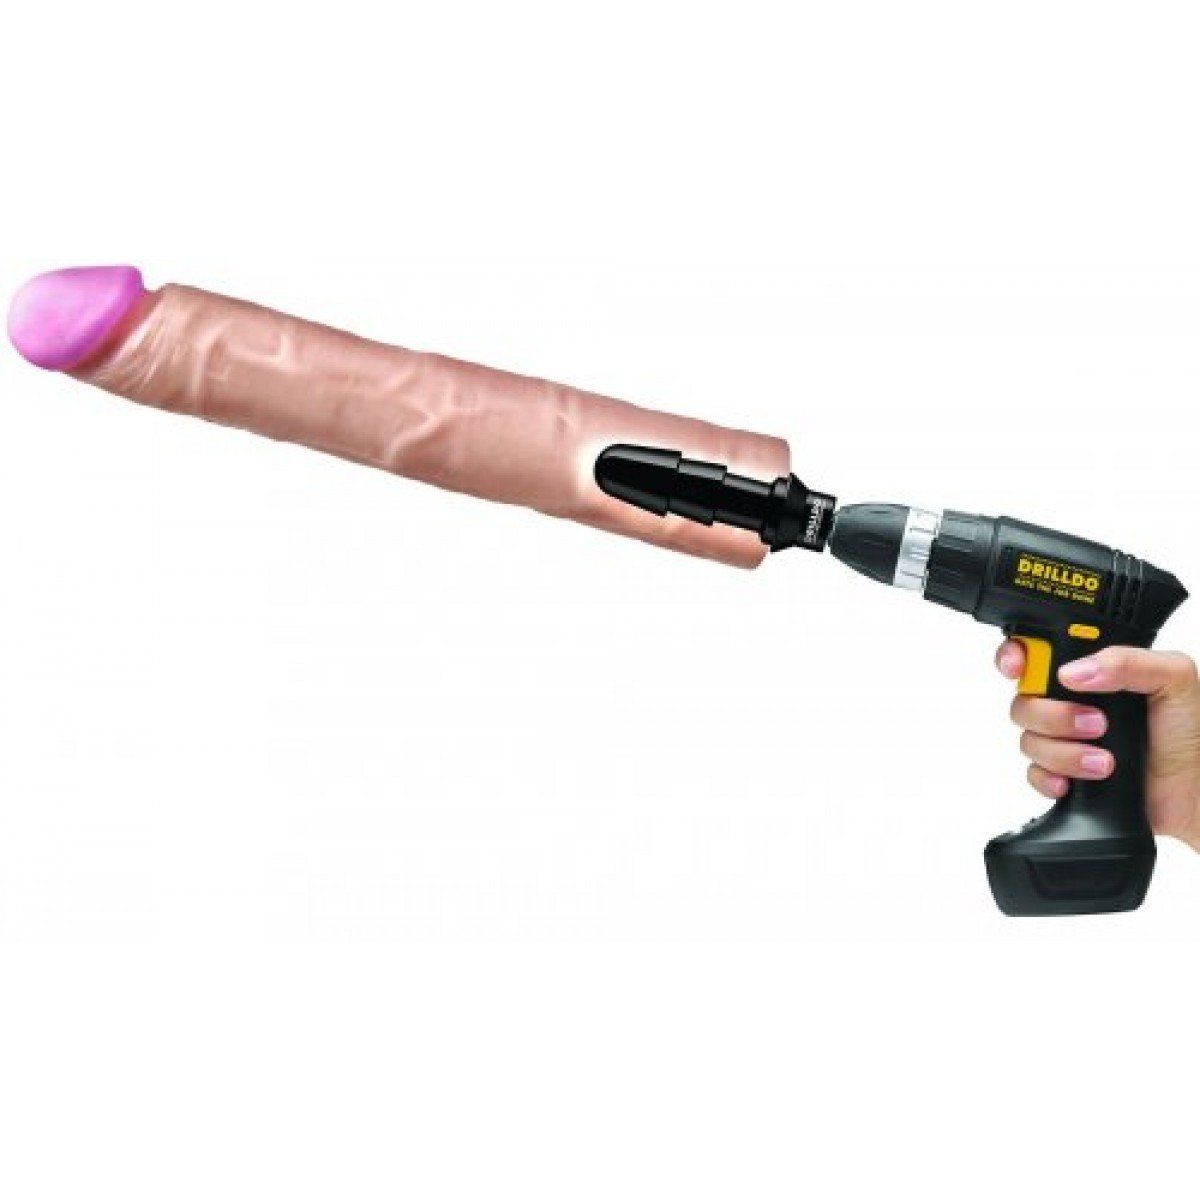 Power tool sex toys